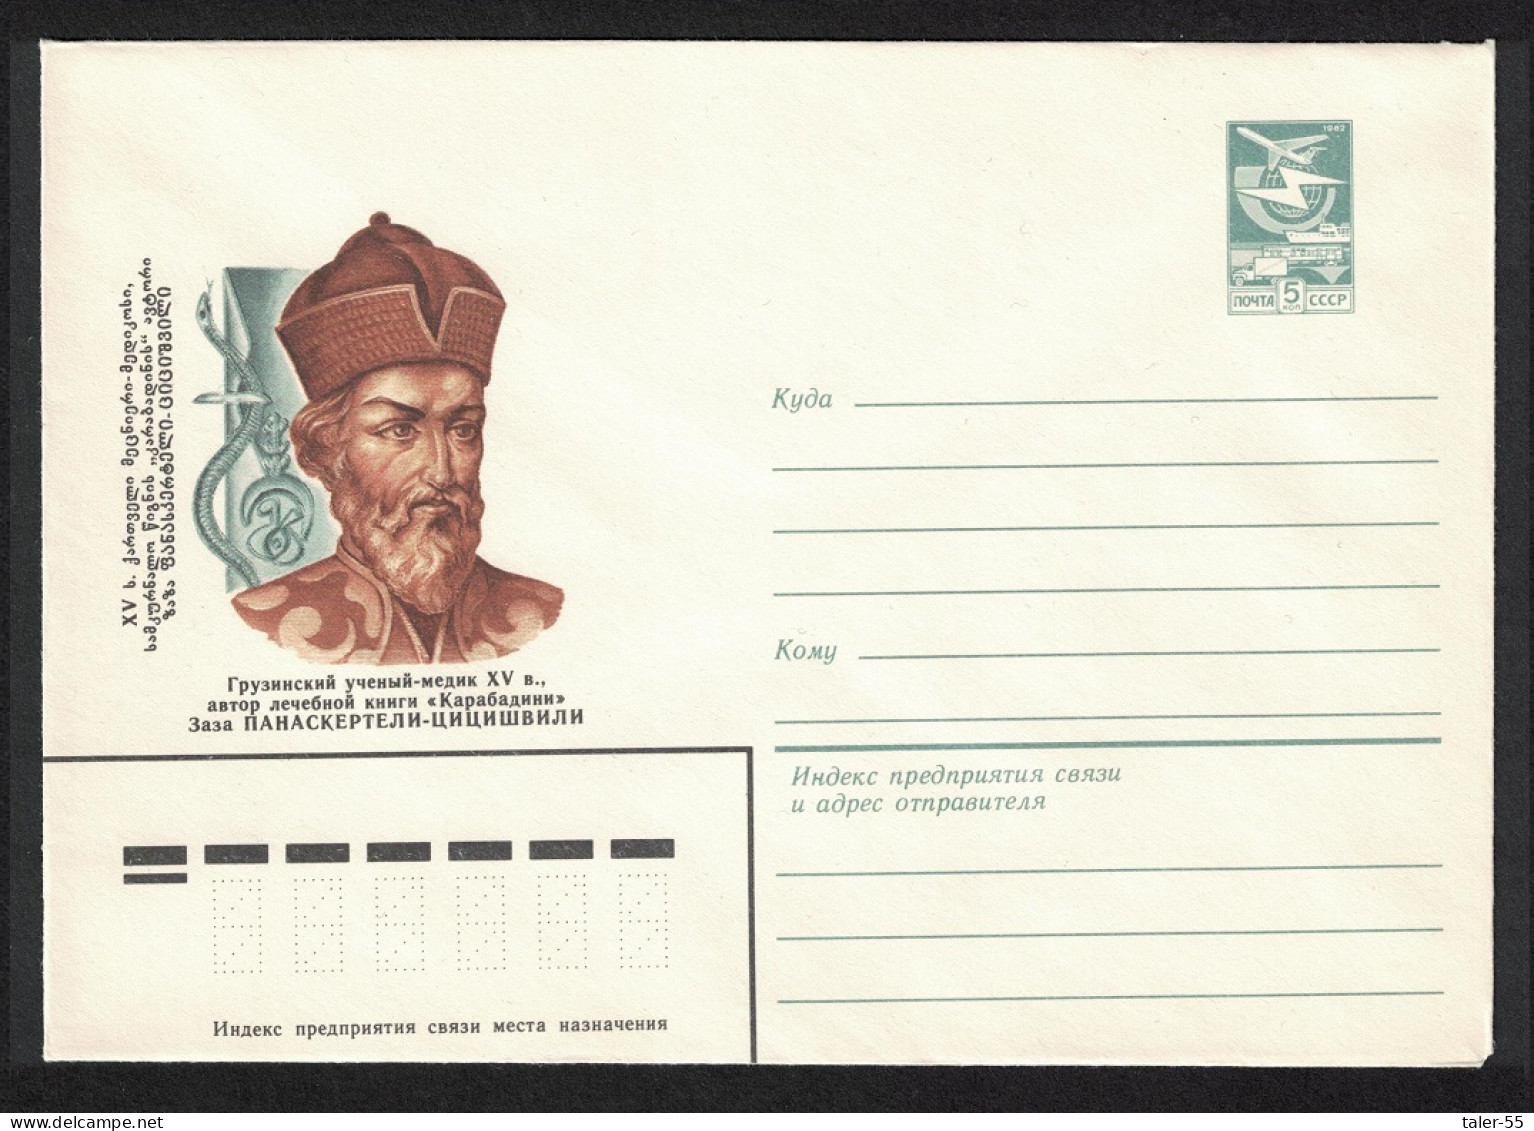 USSR Zaza Panaskerteli Great Georgian Healer Pre-paid Envelope 1980 - Gebruikt